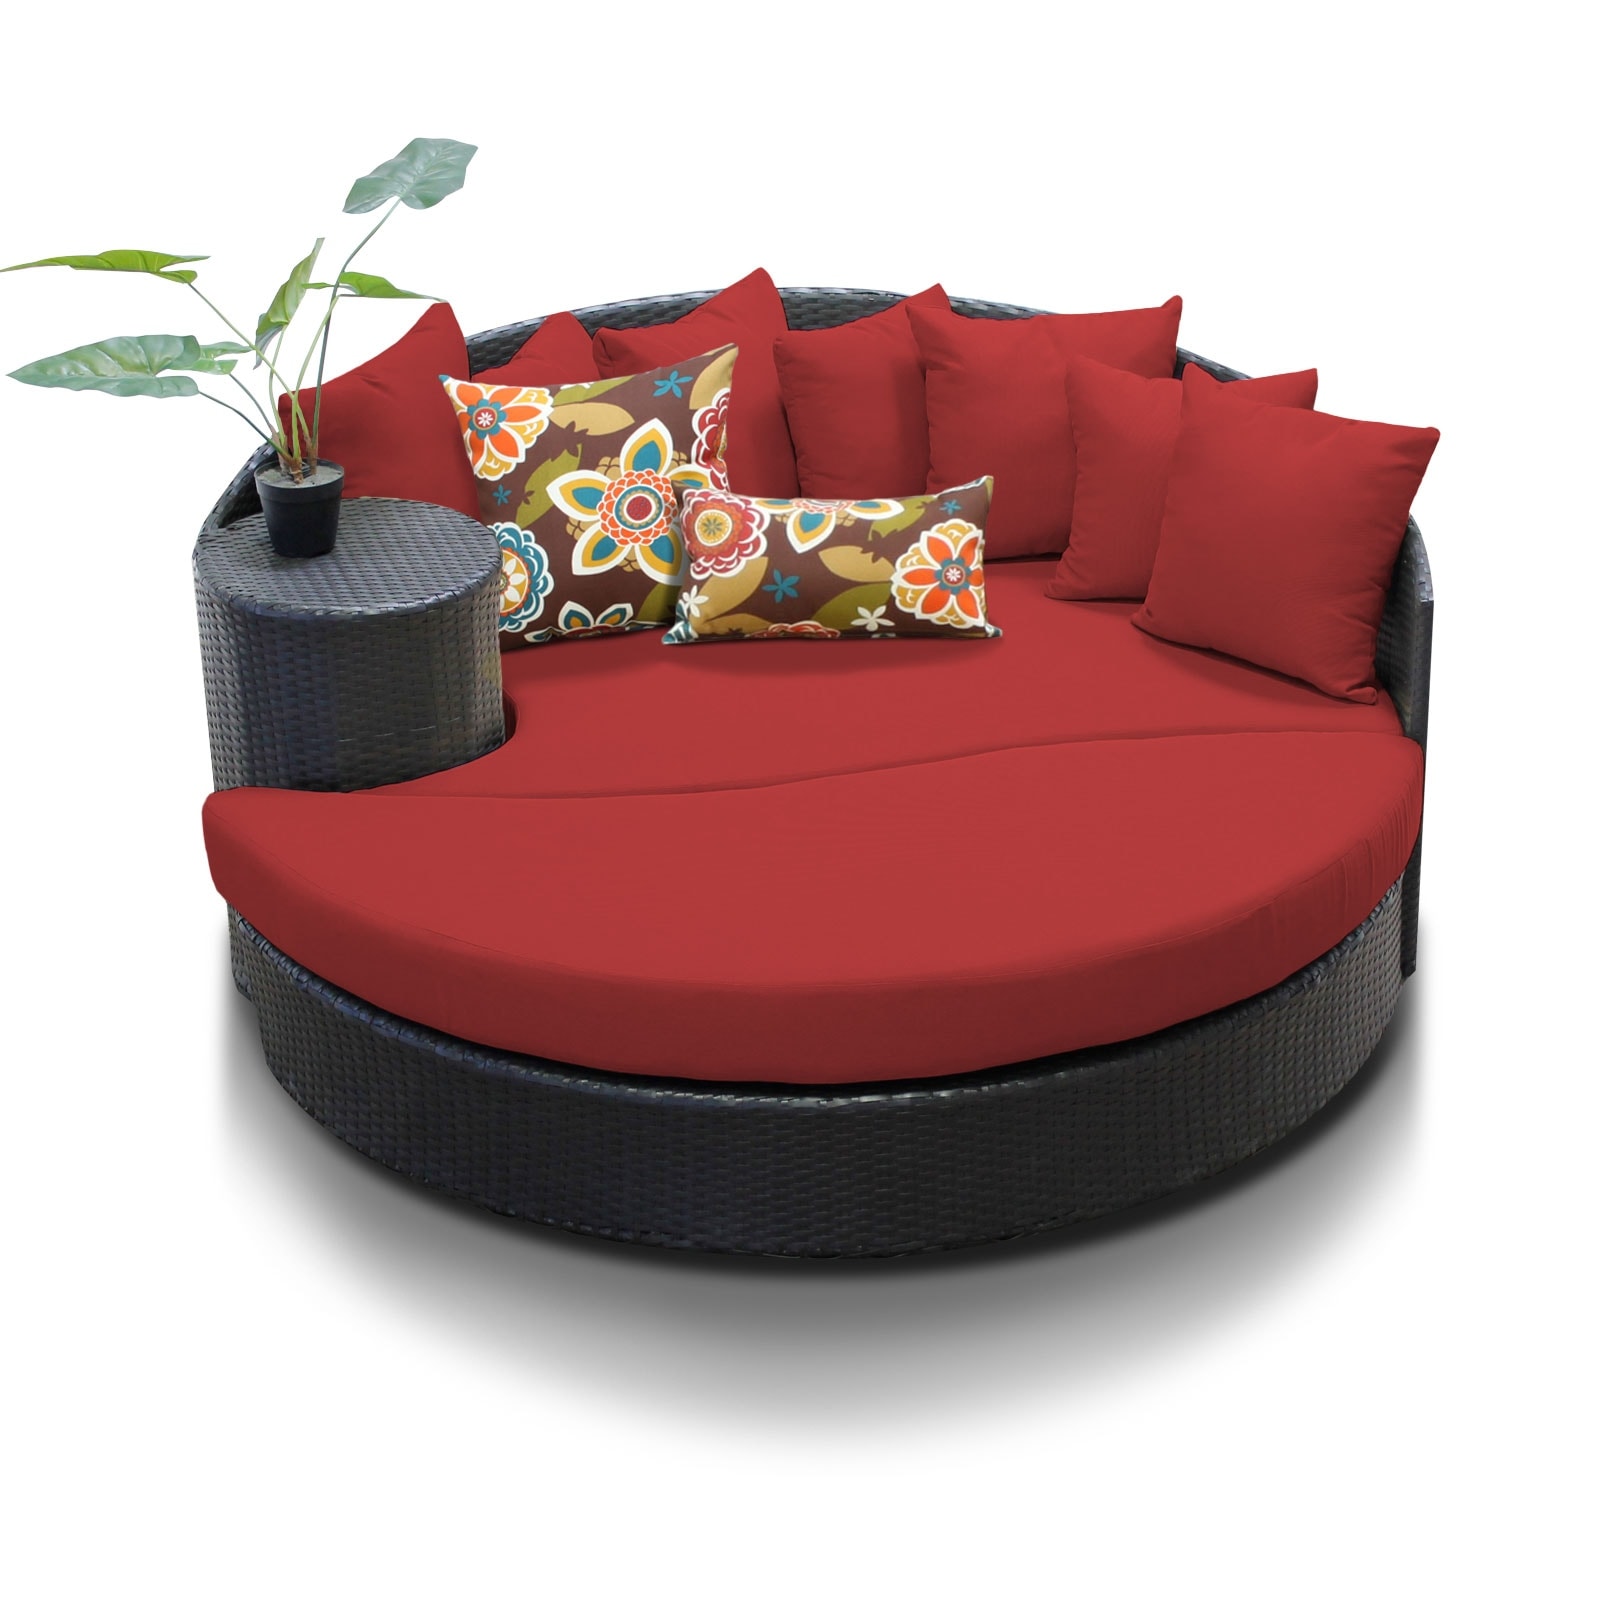 Belle Circular Sun Bed - Outdoor Wicker Patio Furniture